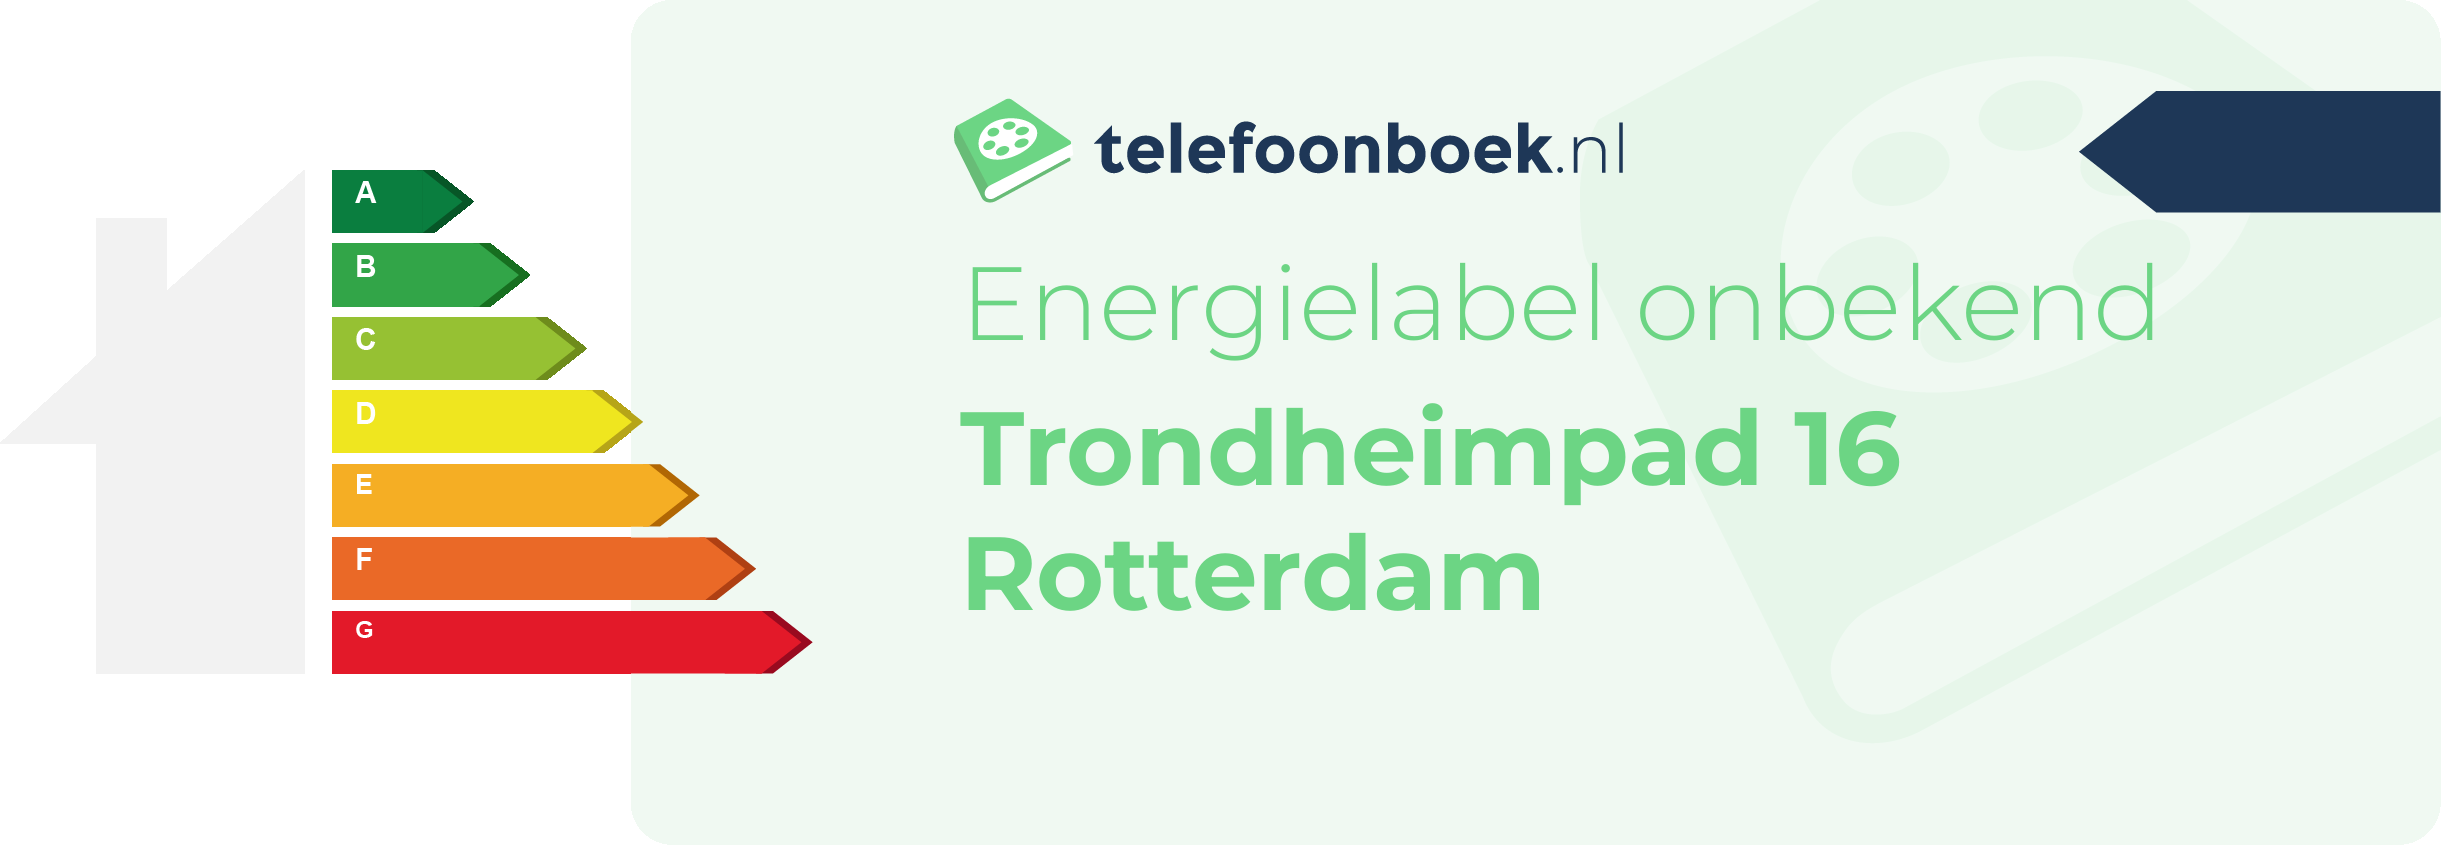 Energielabel Trondheimpad 16 Rotterdam